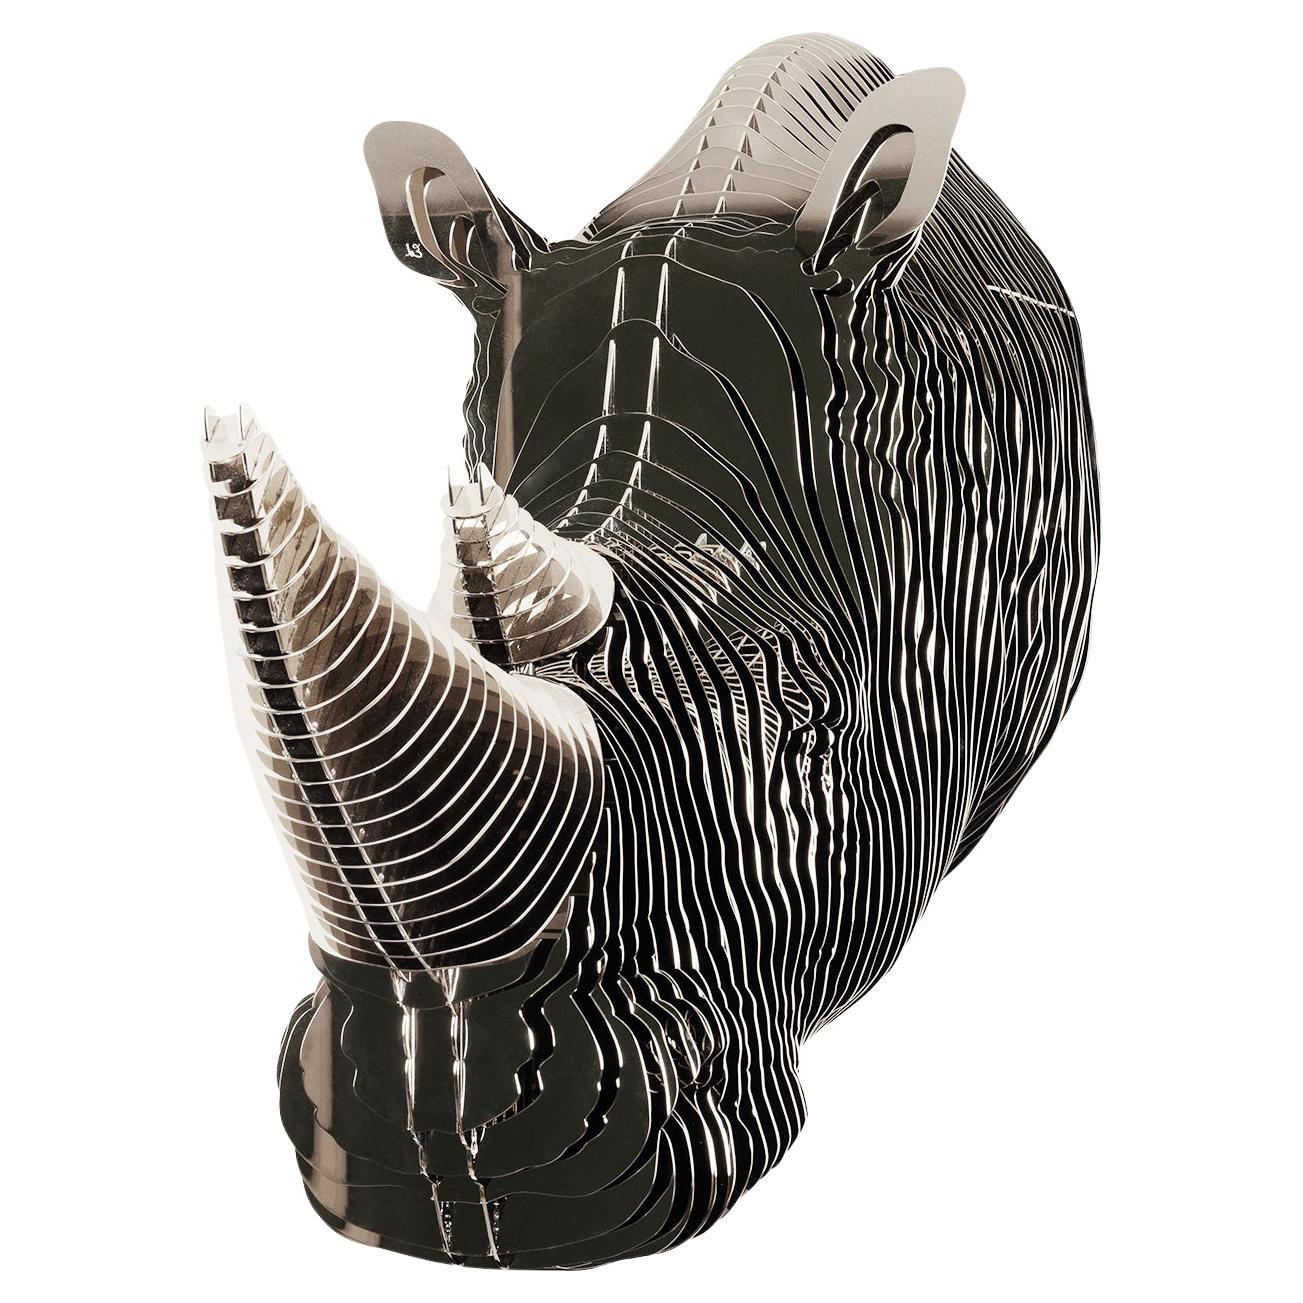 Rhino-Trophäe-Skulptur